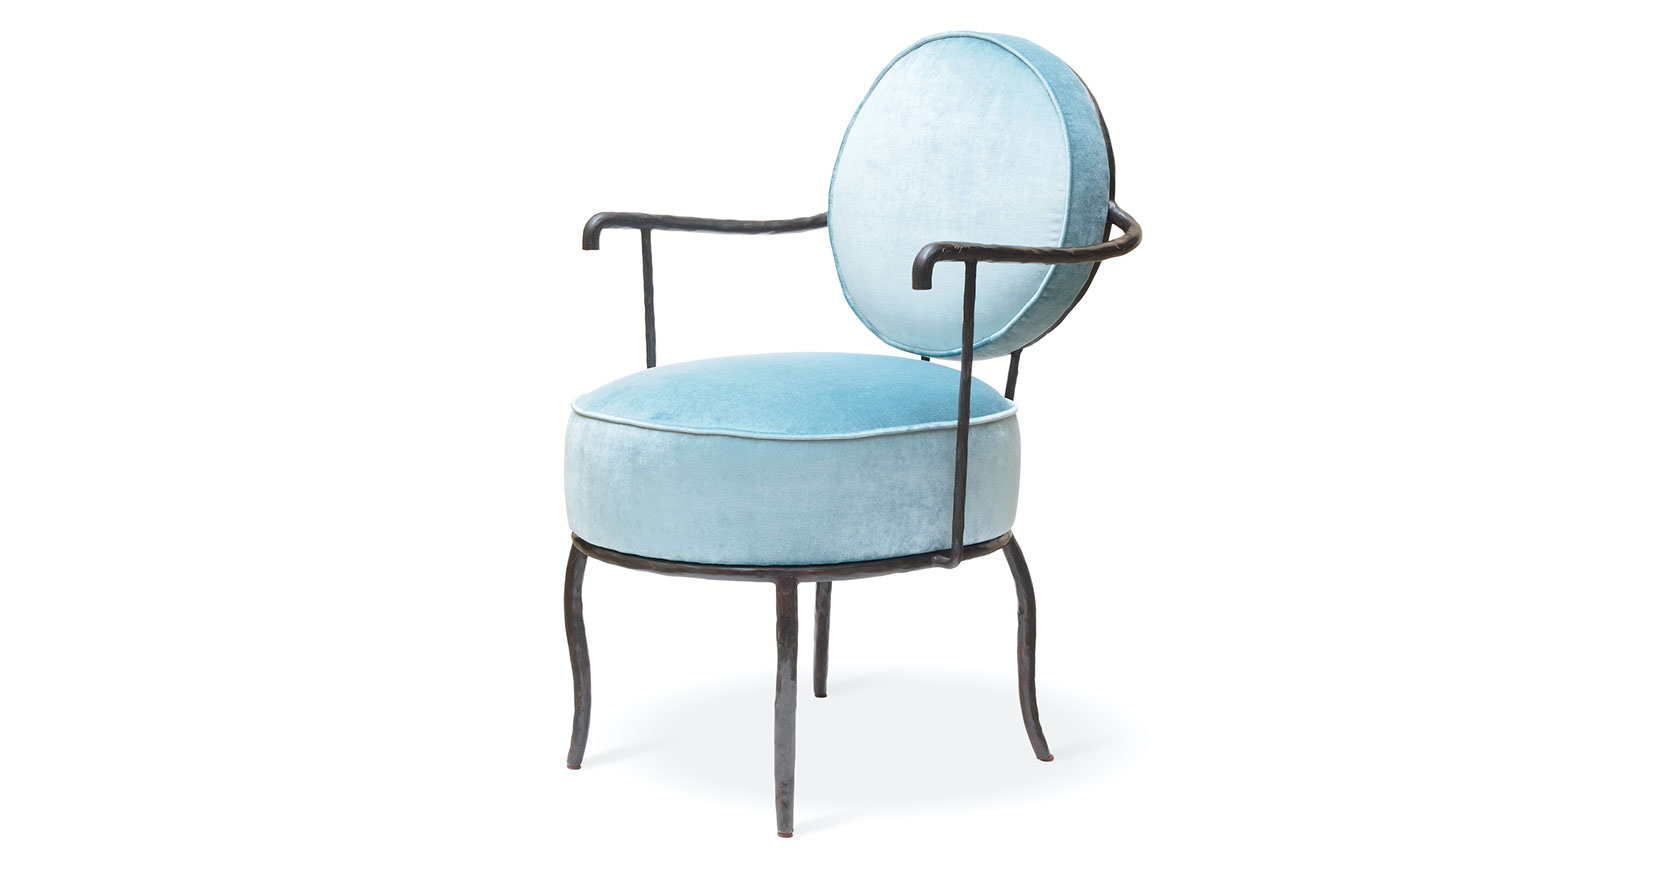 fauteuil elizabeth garouste - elisabeth garouste - elizabeth garouste - galerie en attendant les barbares - lady madonna bleu- garouste - french design